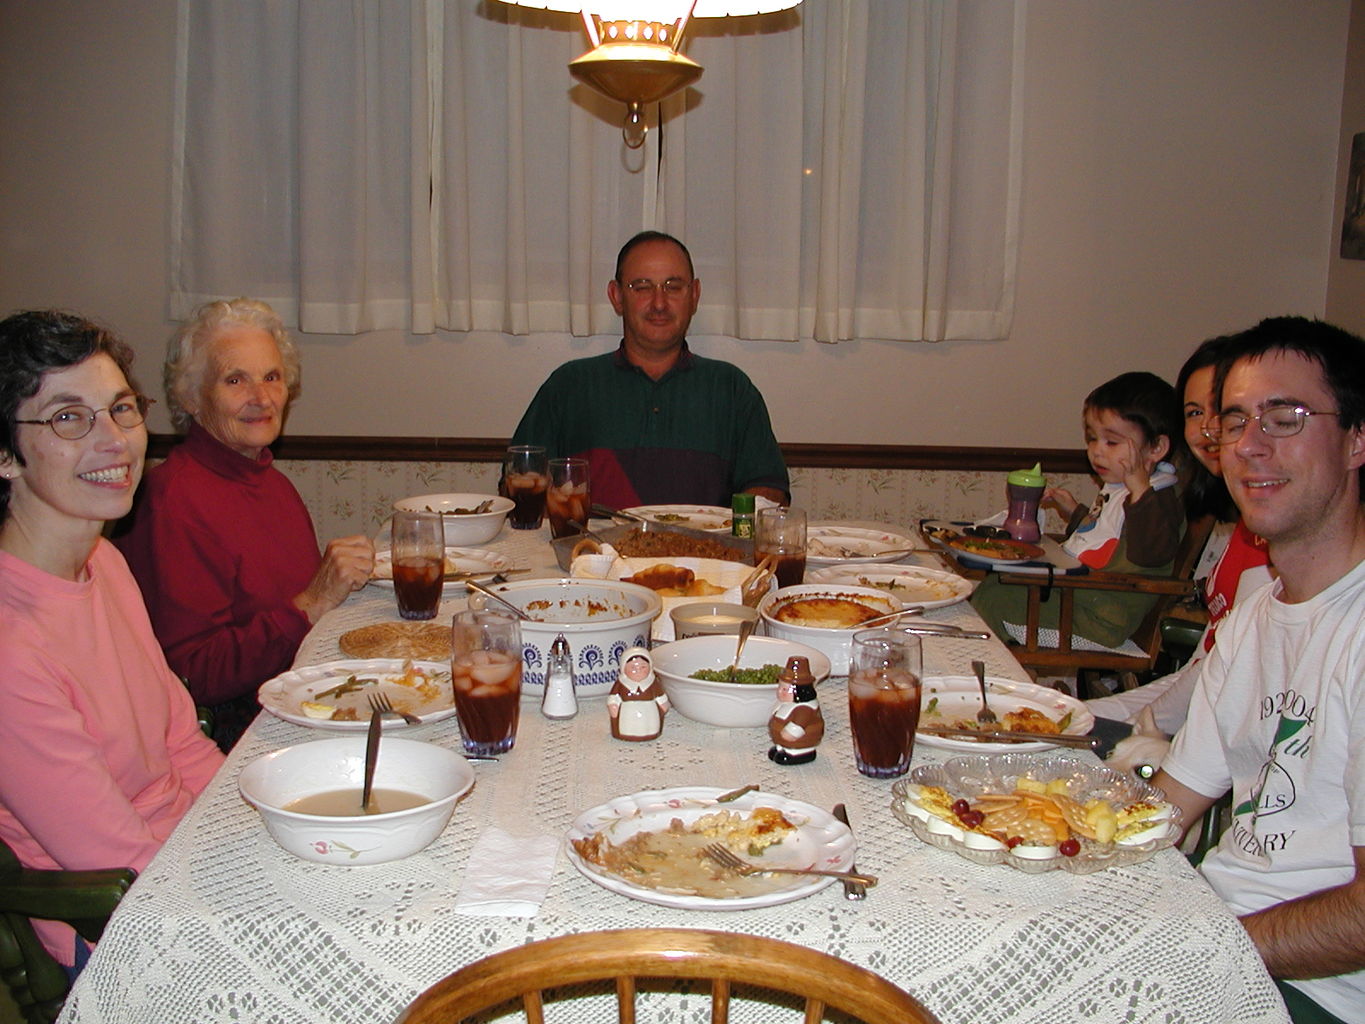 Thanksgiving 2004 - Day 5
